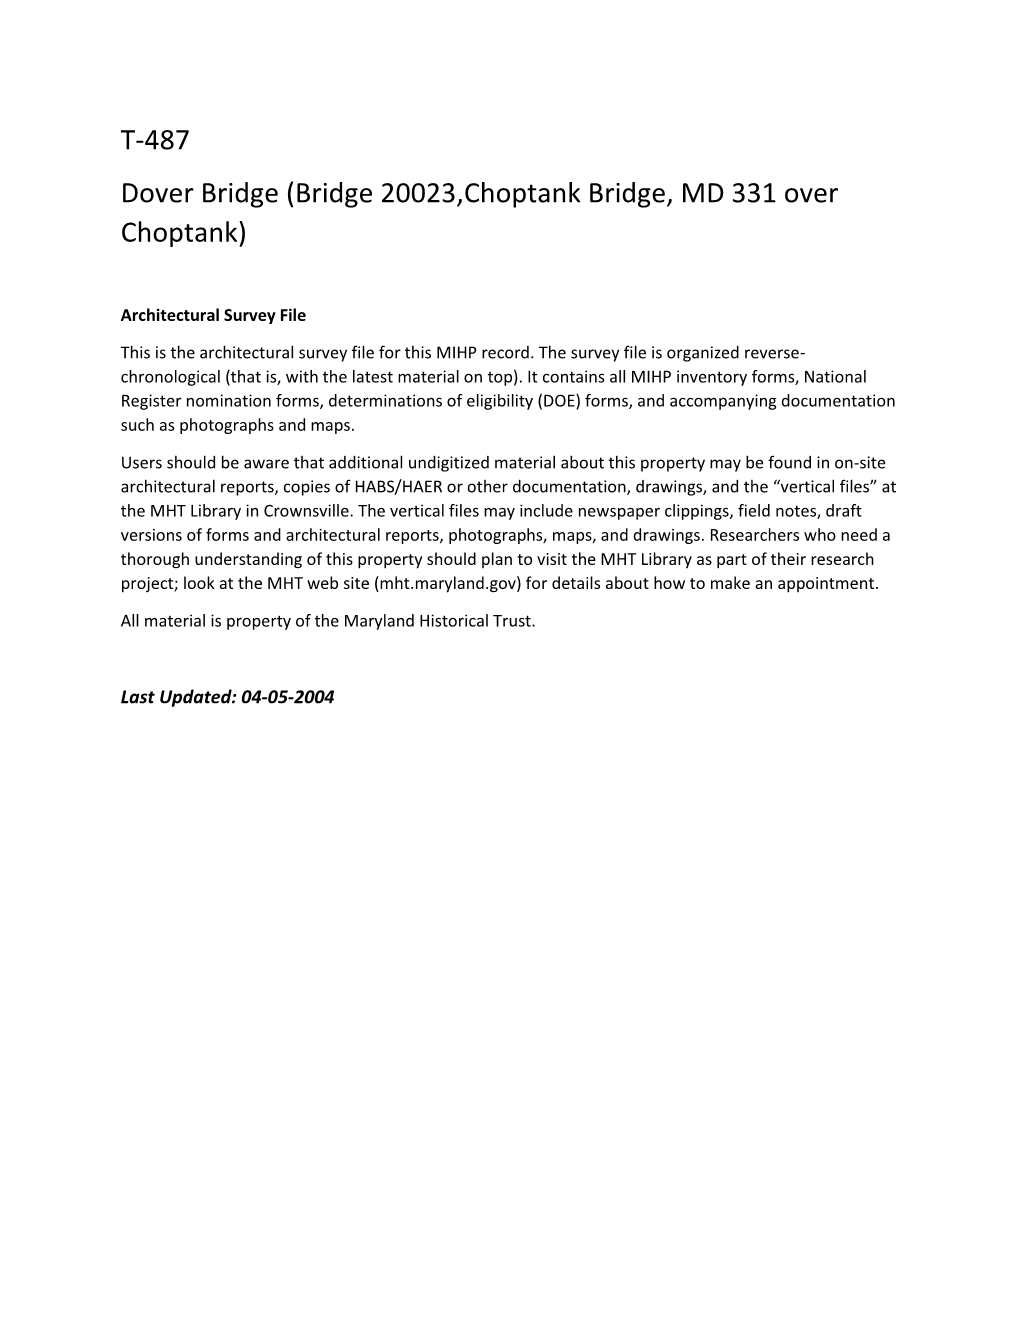 T-487 Dover Bridge (Bridge 20023,Choptank Bridge, MD 331 Over Choptank)